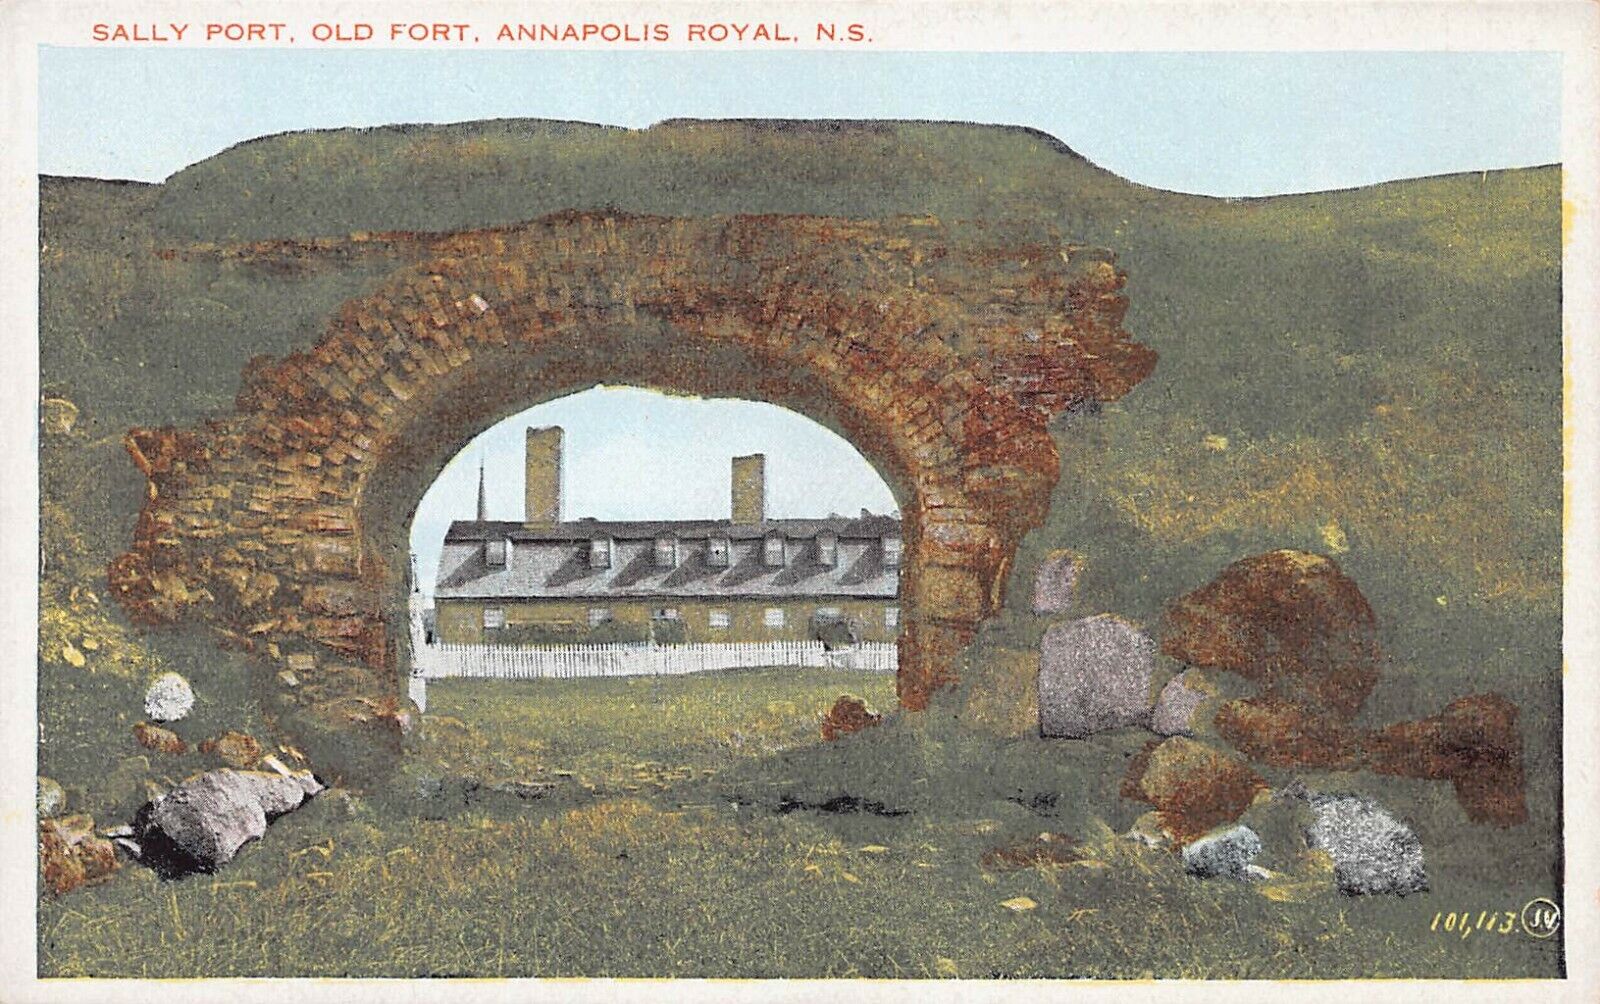 Sally Port, Old Fort, Annapolis Royal, Nova Scotia, Canada, Early Postcard